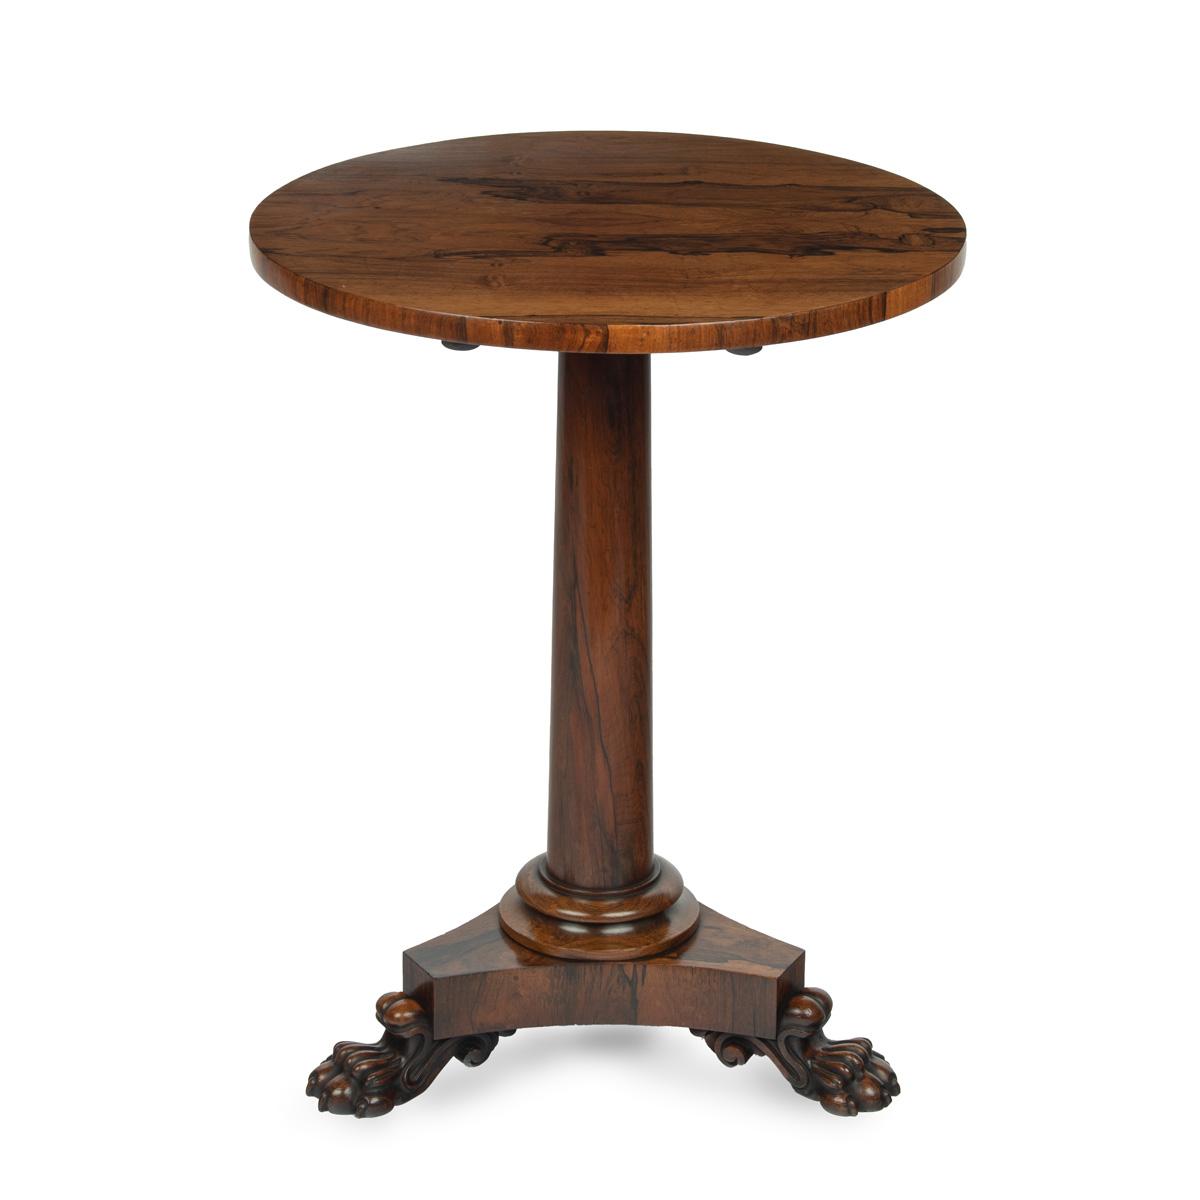 William IV circular occasional tilt-top table